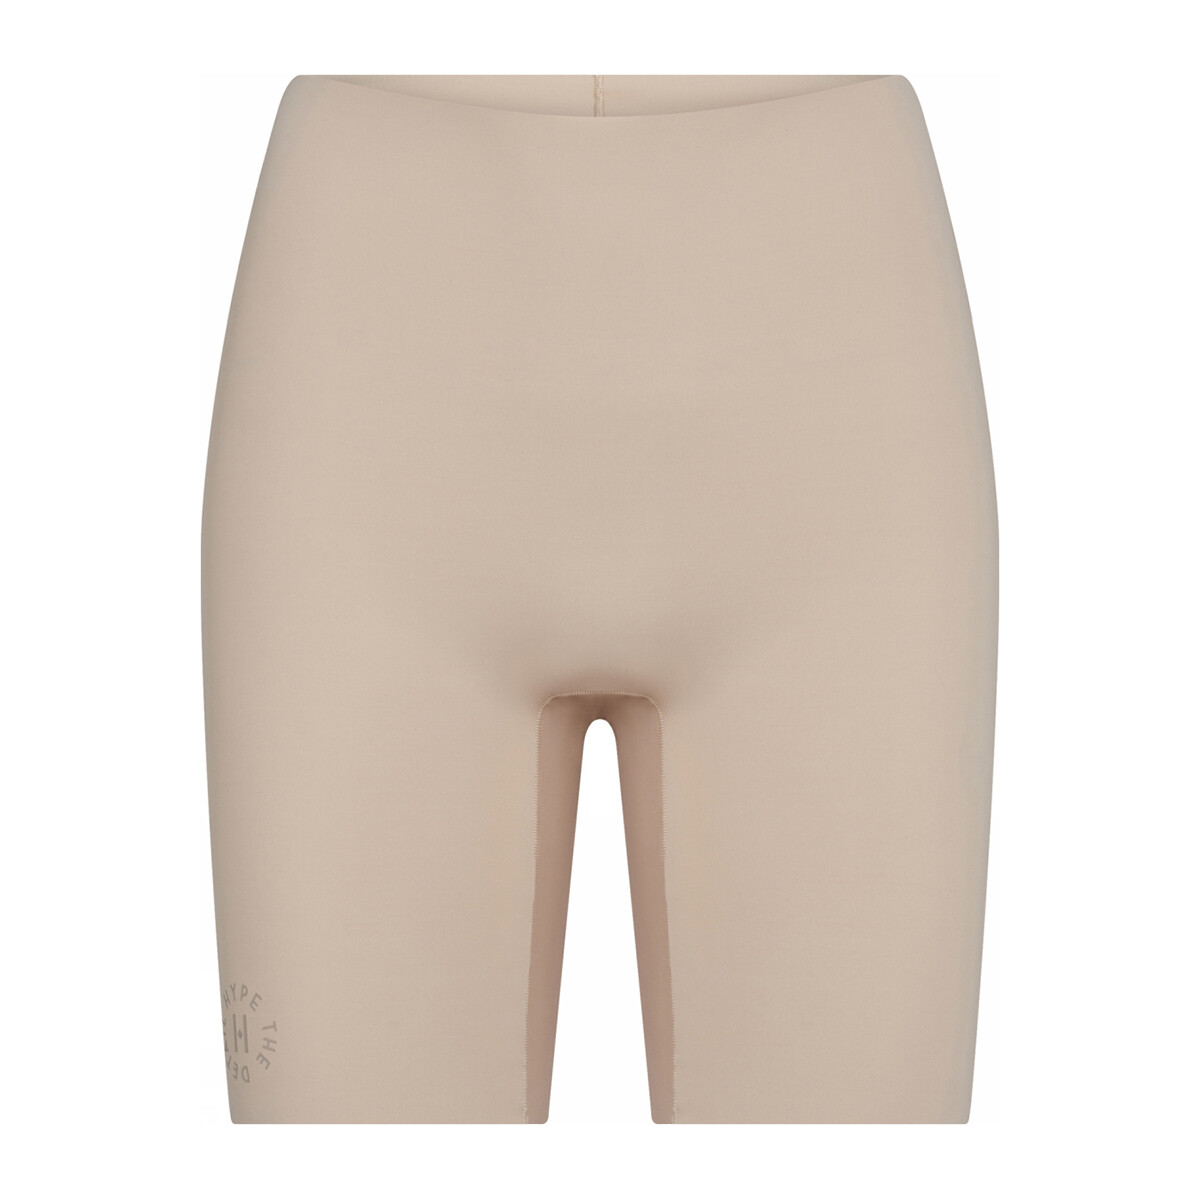 Se Hype The Detail Essentials Shorts, Farve: Beige, Størrelse: XS, Dame hos Netlingeri.dk